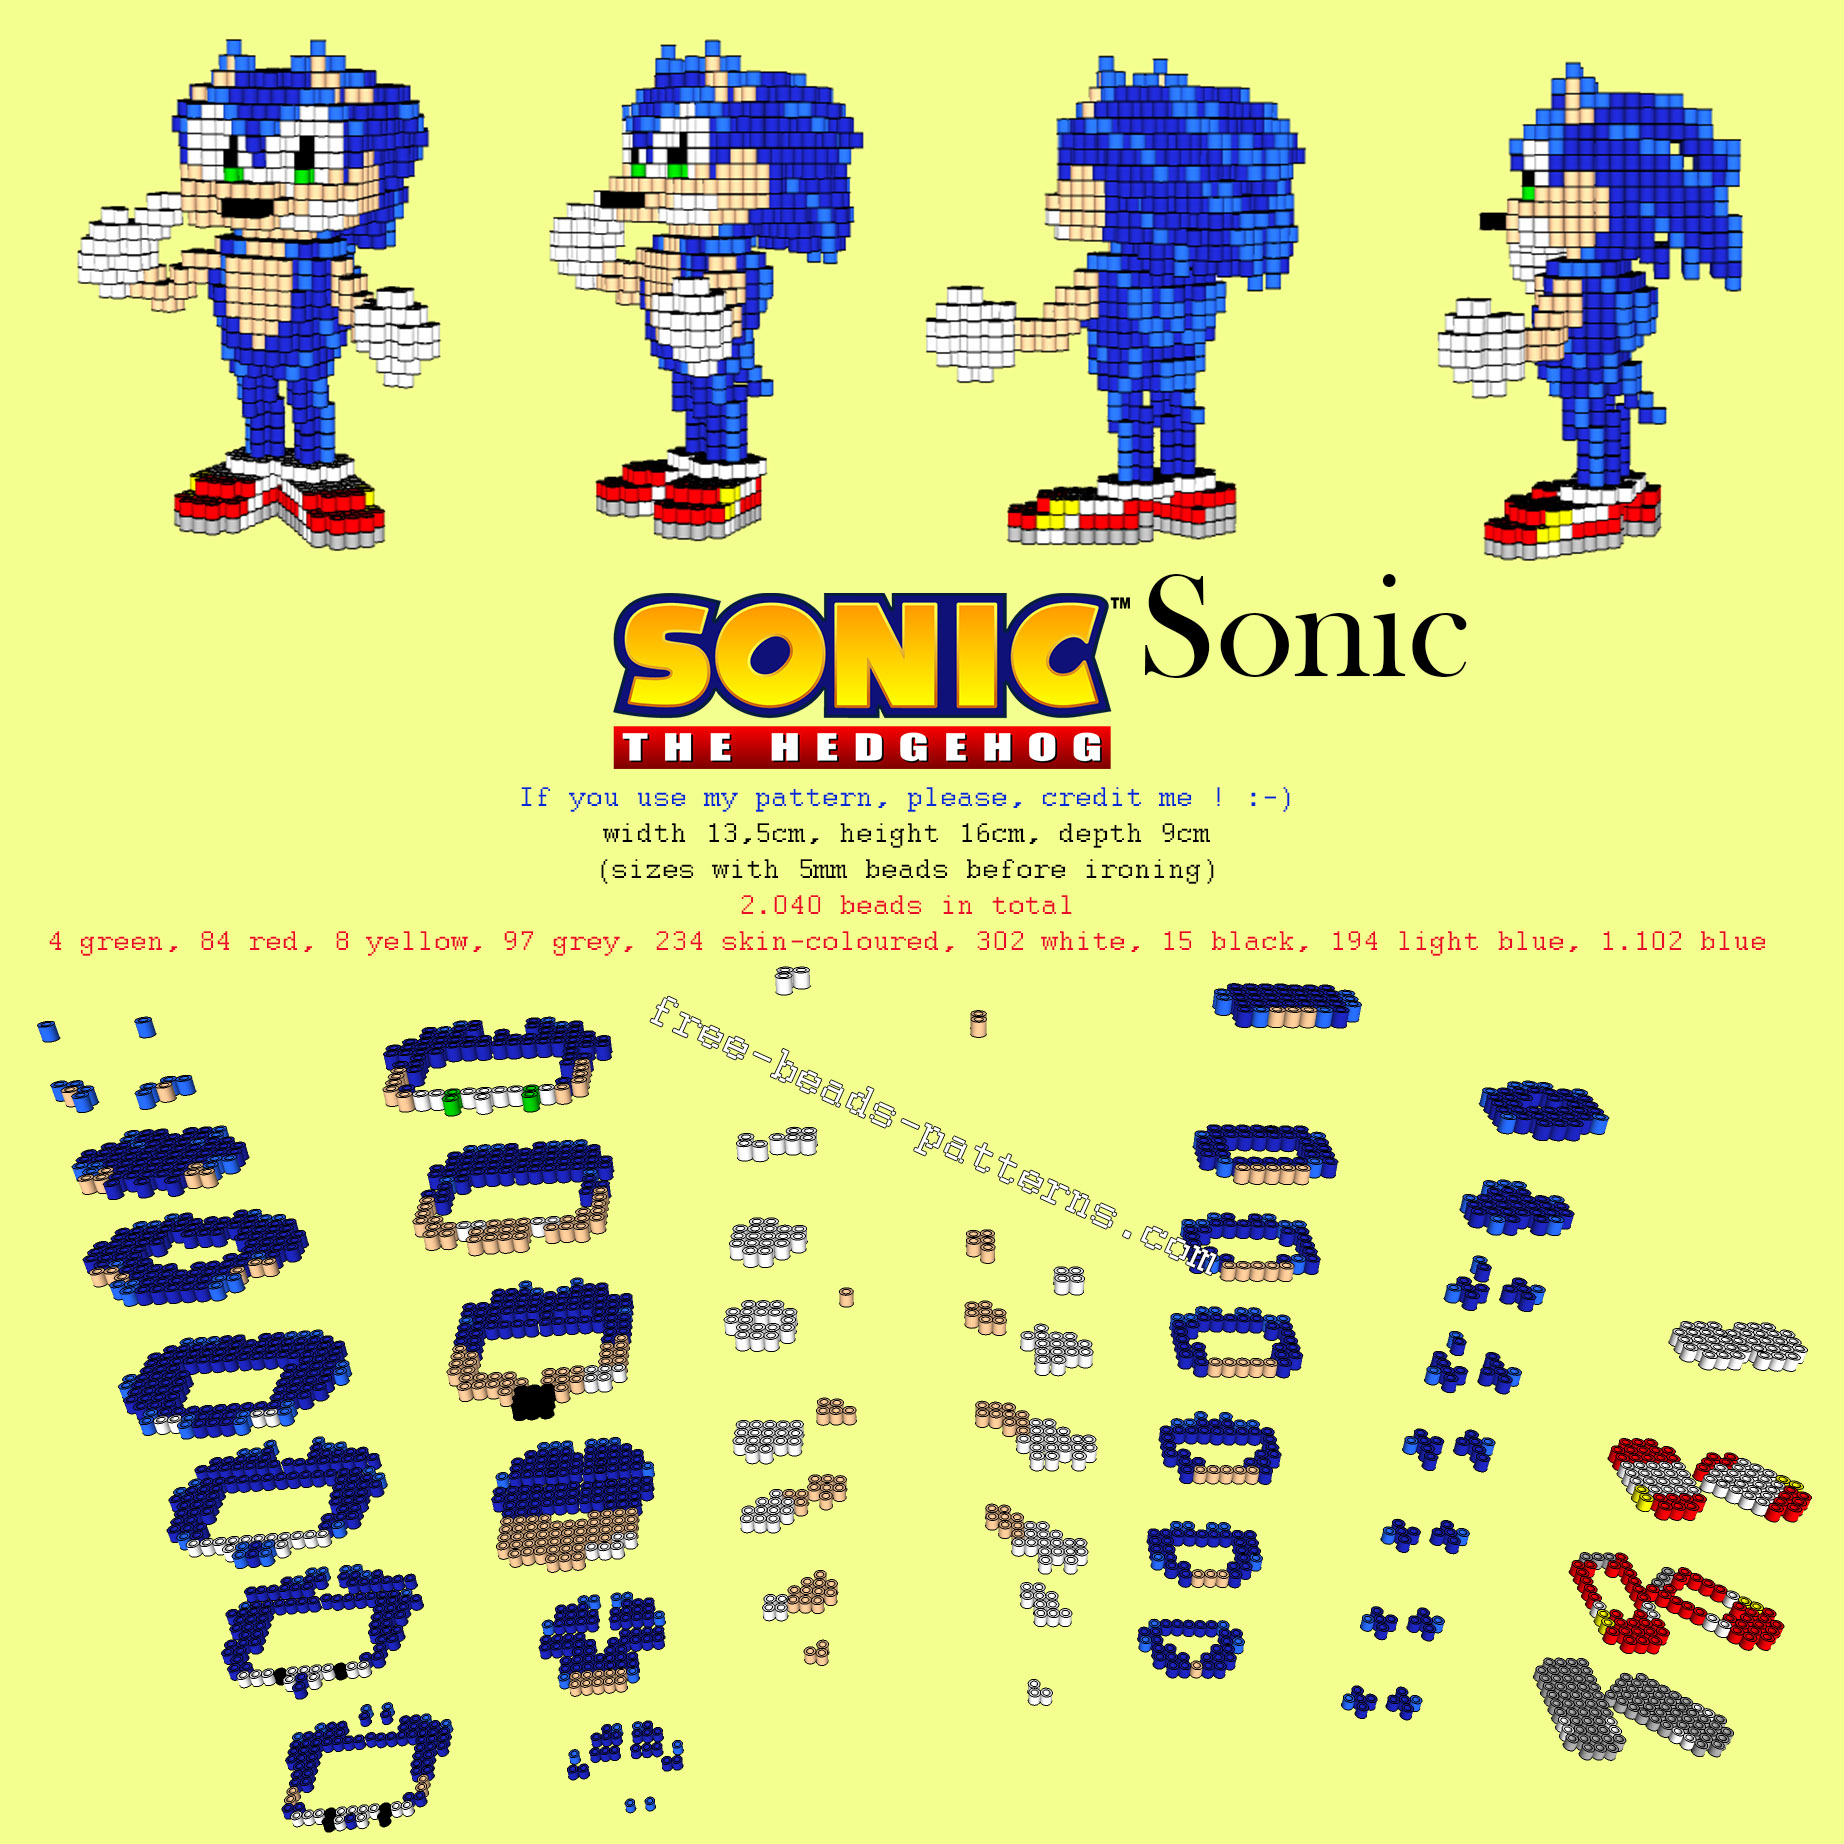 Sonic The Hedgehog Sega videogames free 3D perler beads hama beads pattern tutorial